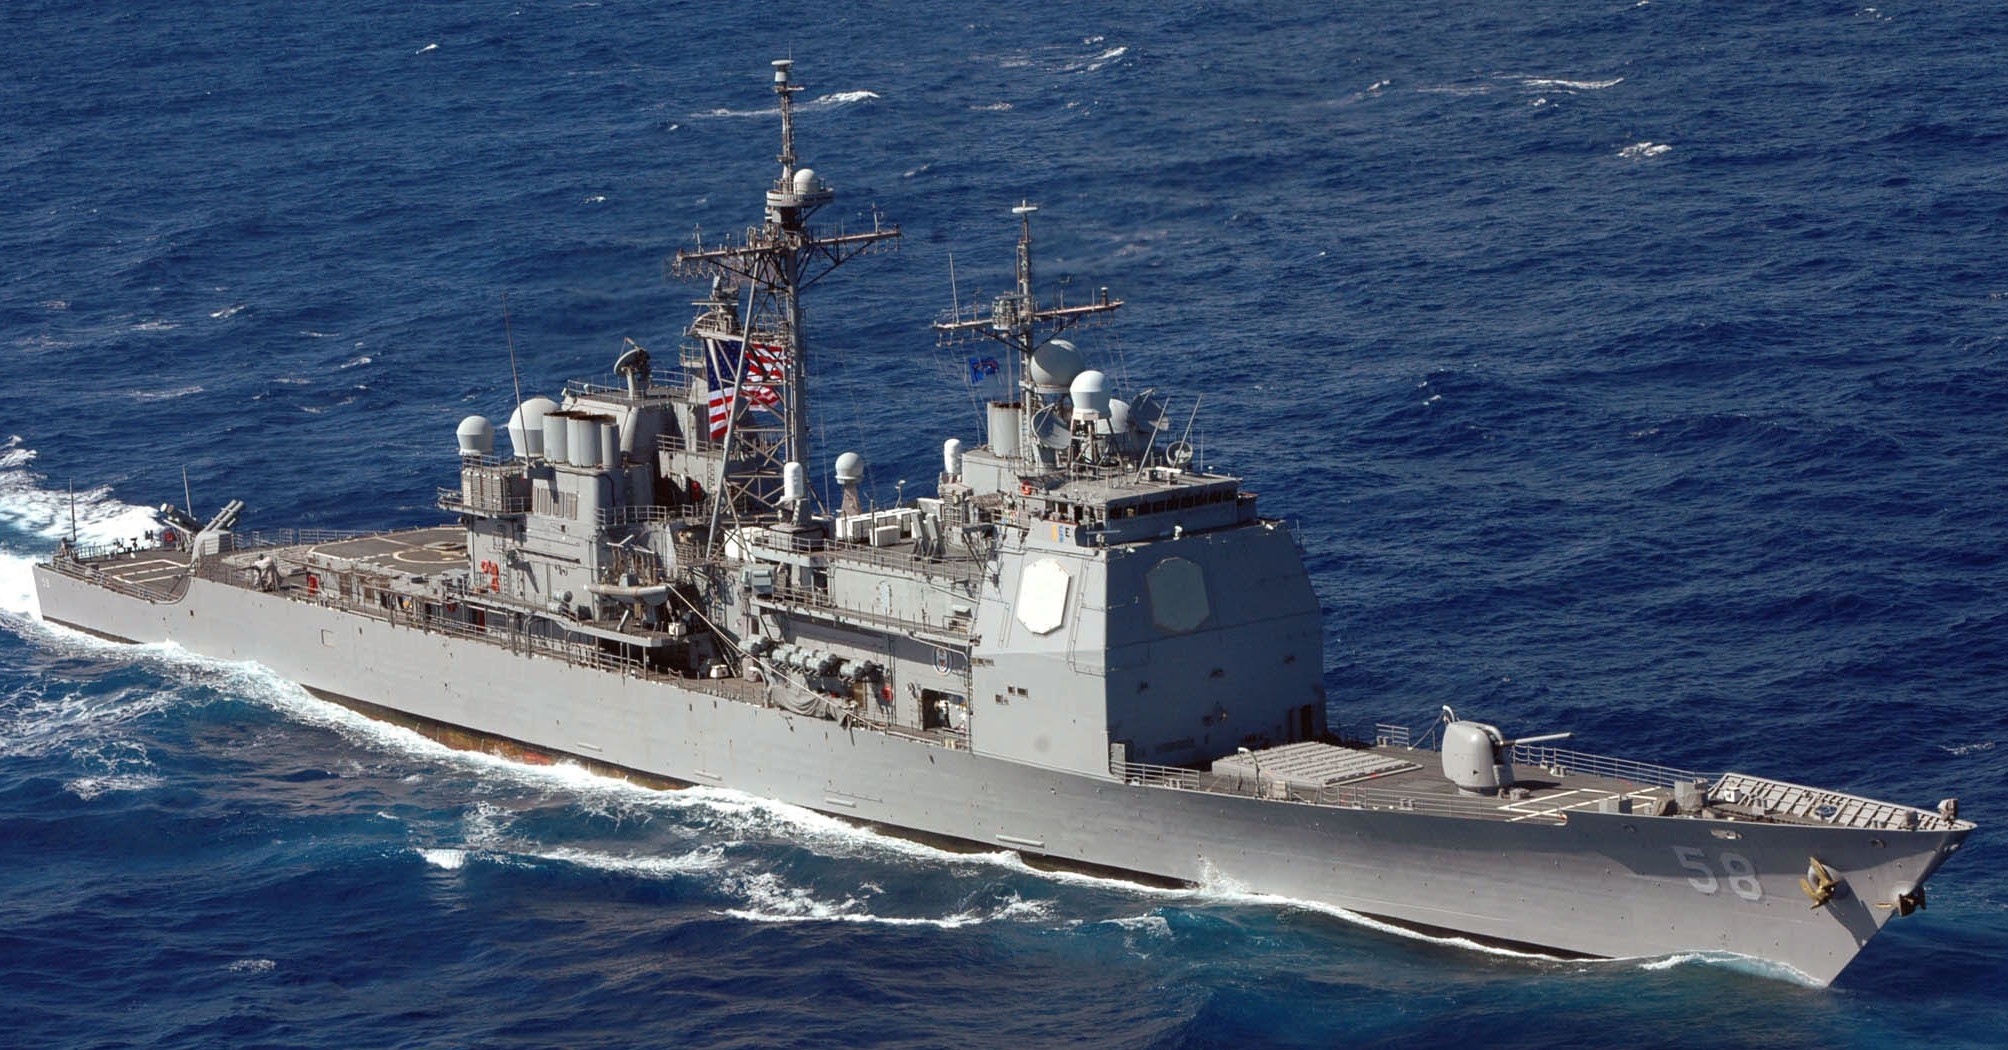 cg-58 uss philippine sea ticonderoga class guided missile cruiser aegis us navy 24